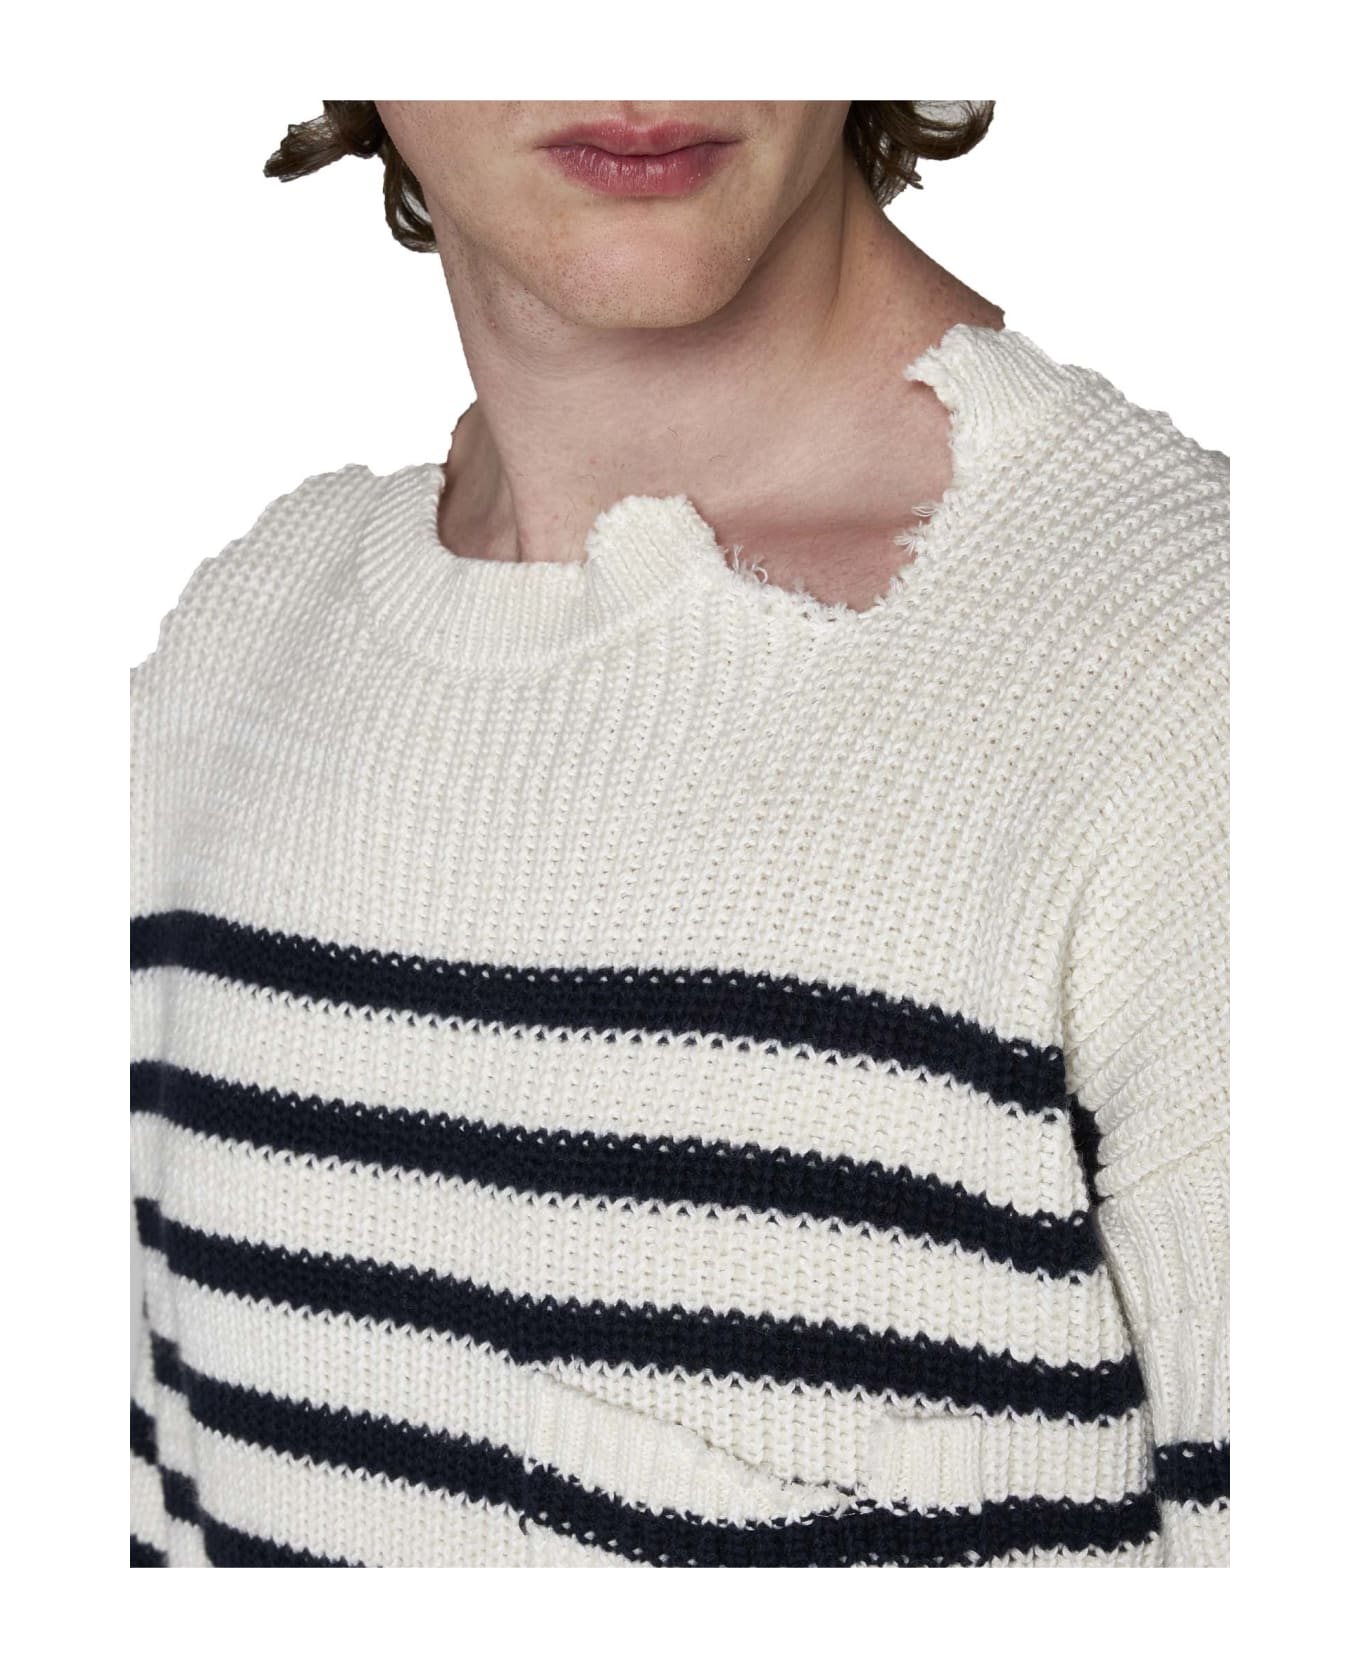 Marni Sweater - Stone white